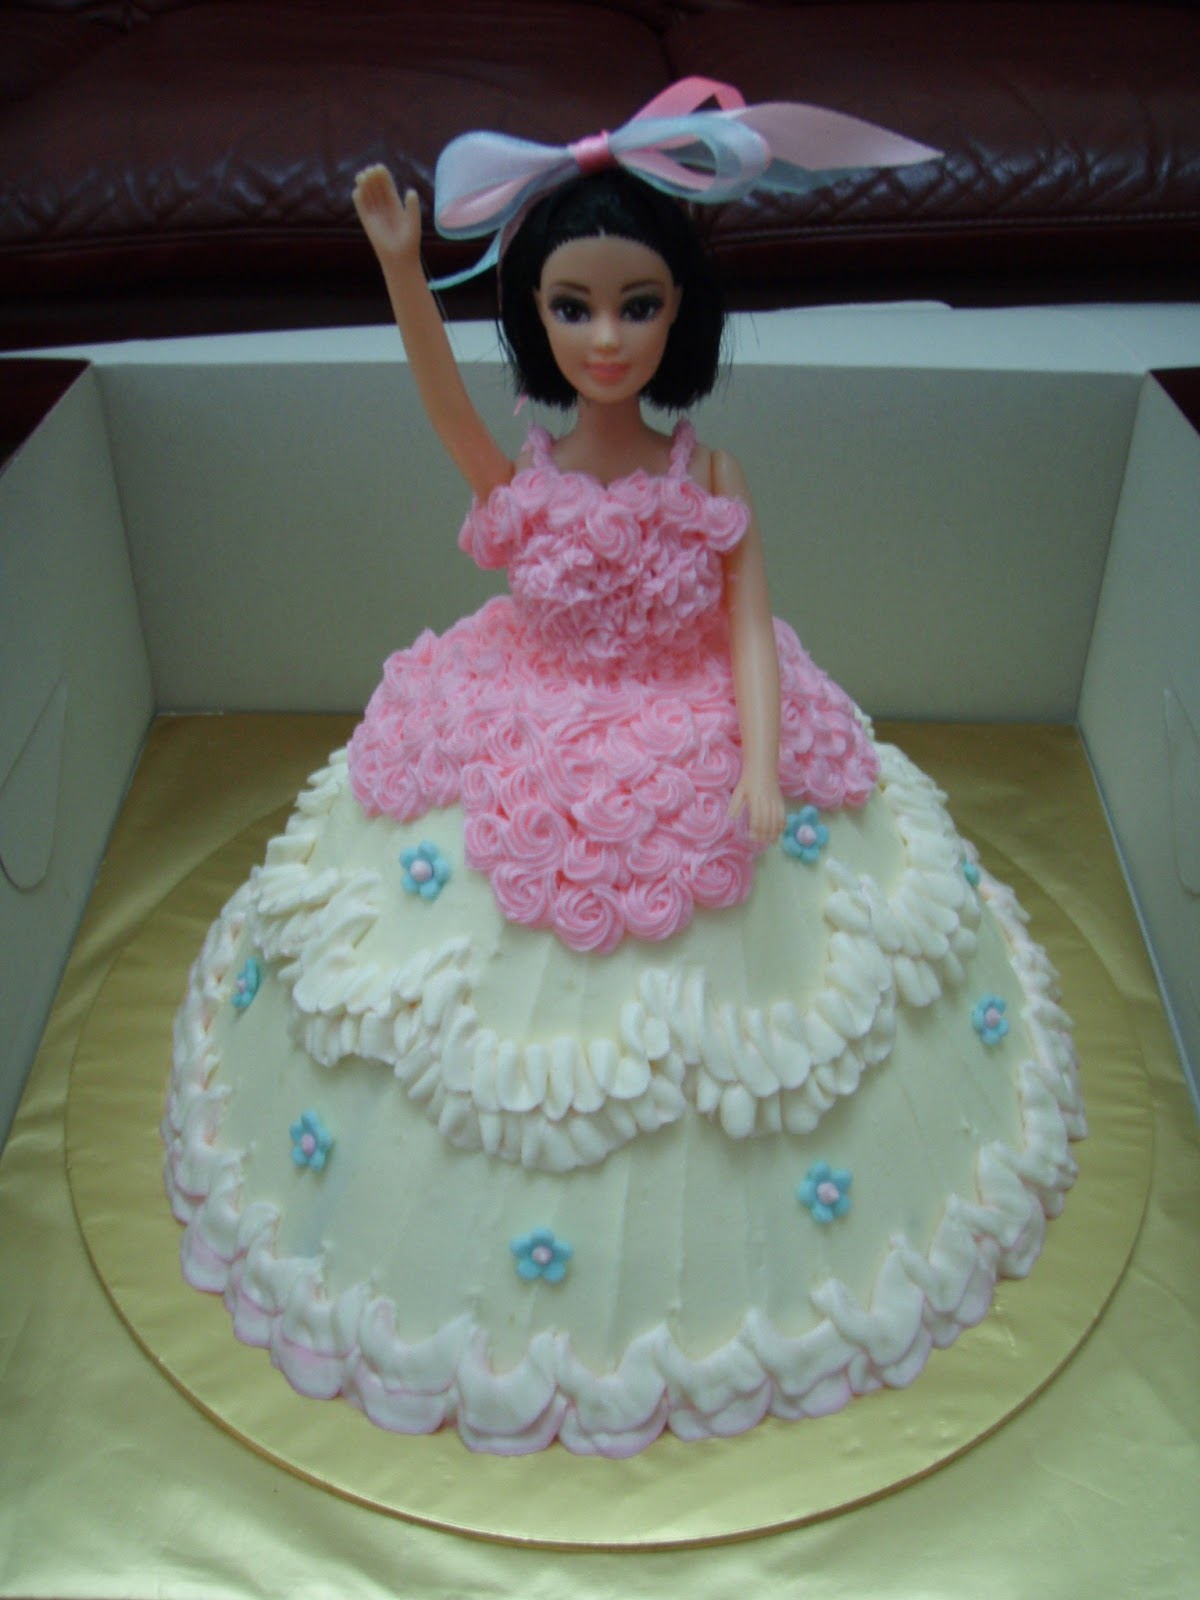 JUST A CAKE: HAPPY BIRTHDAY MARYAM HILWA